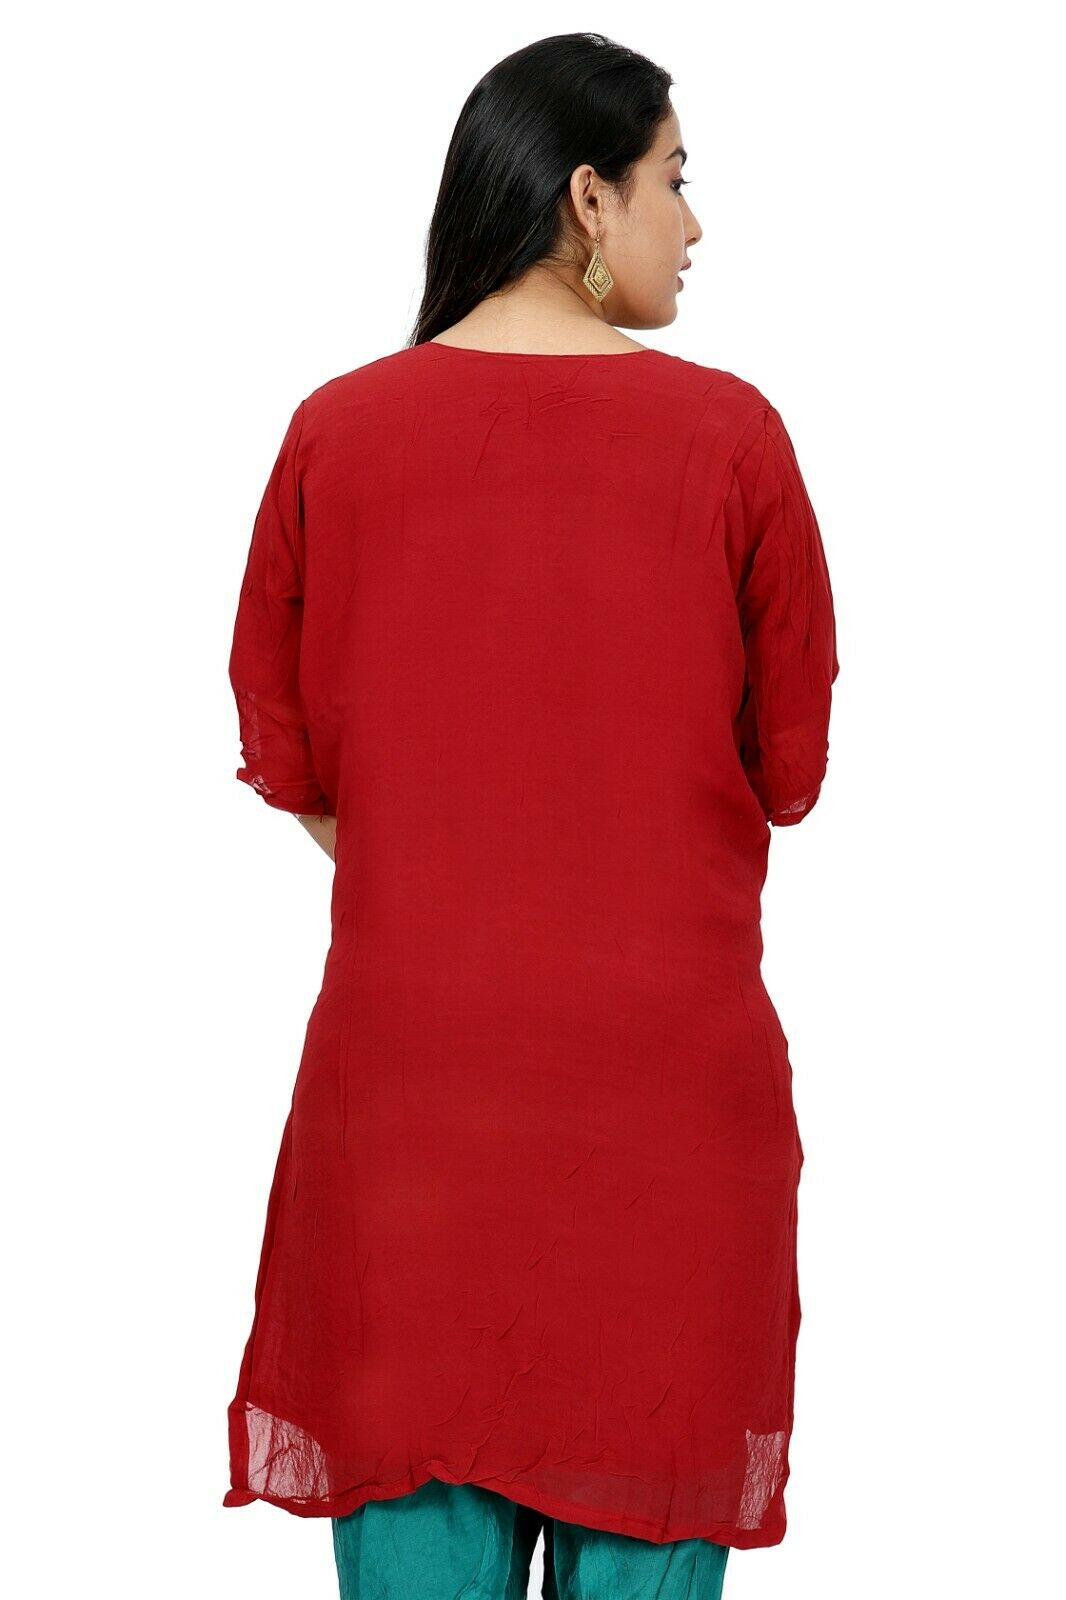 Red Green Cotton Designer Ethnic  Short Sleeves  Salwar kameez chest size 52